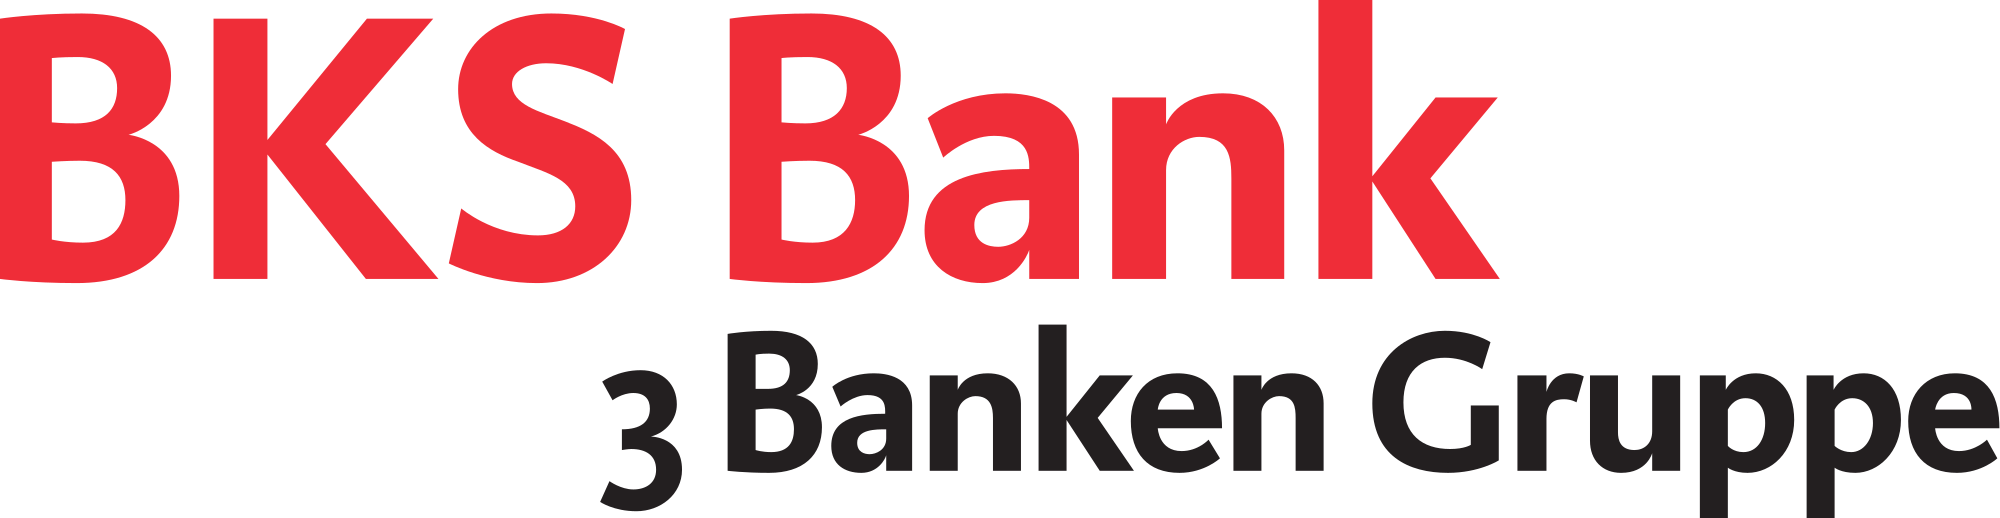 Infinity Business Network - BKS Bank - Logo